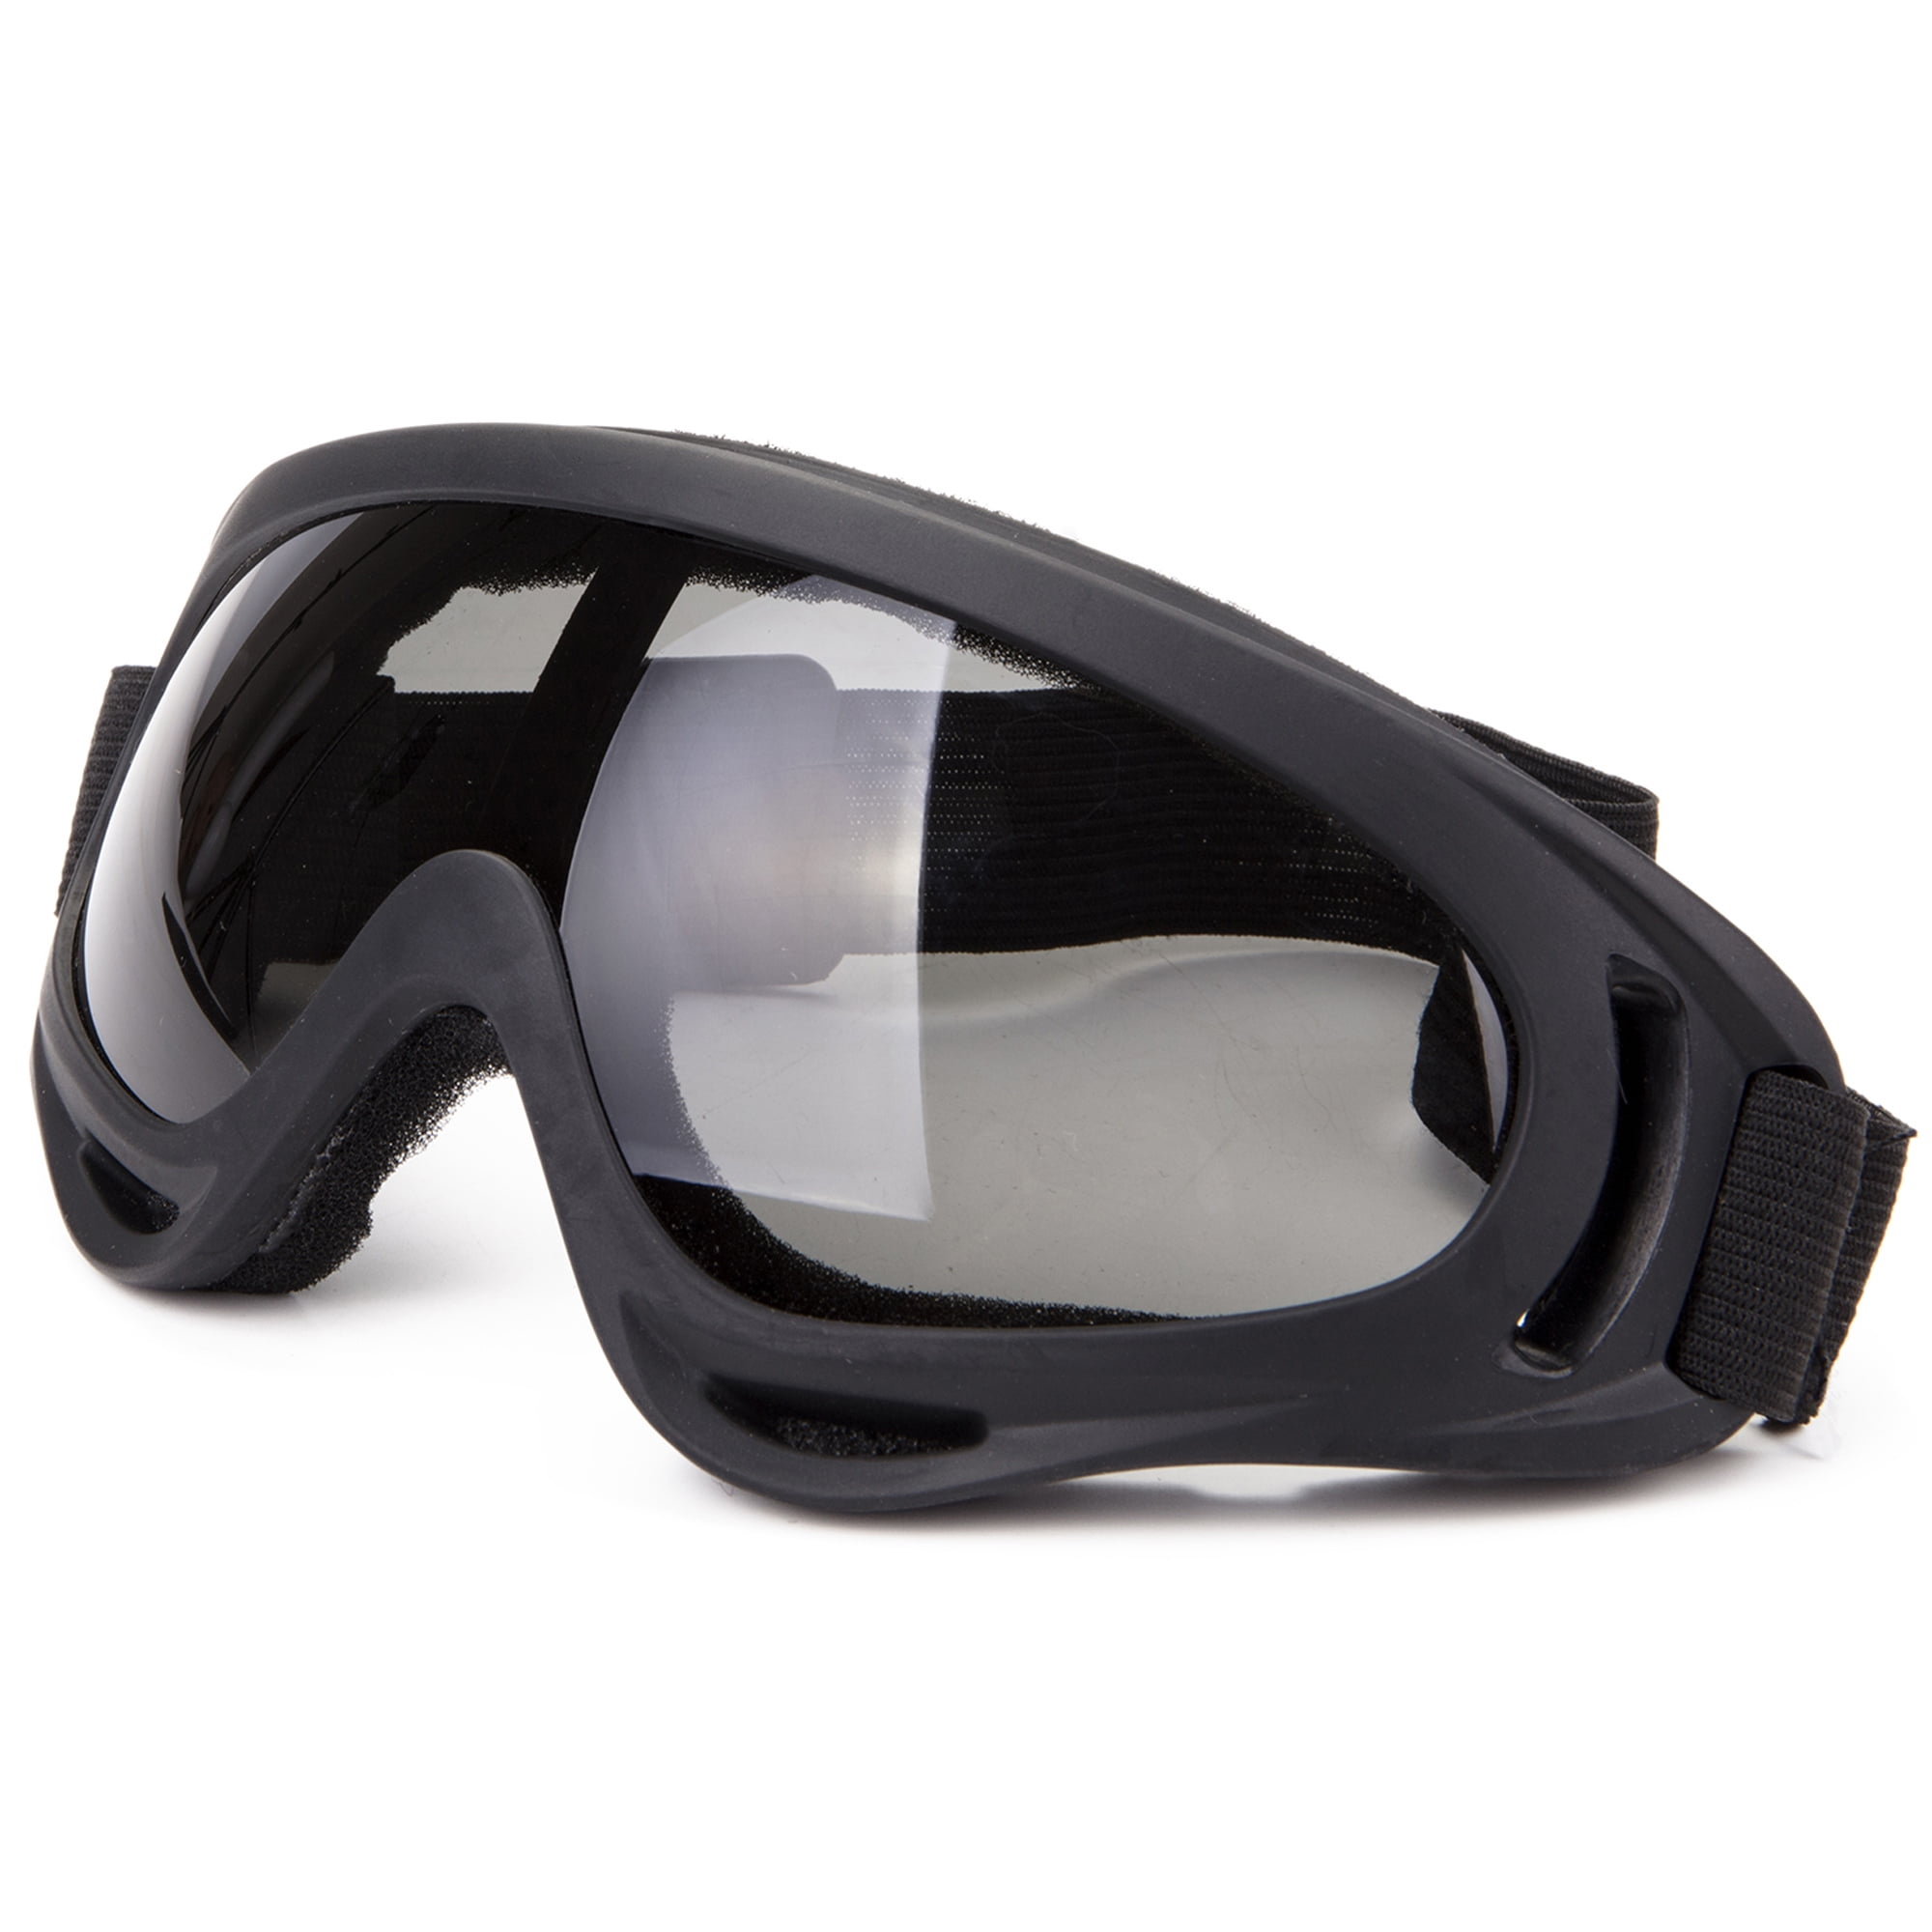 SAYFUT Ski Snowboard Goggles UV Protection AntiFog Snow Goggles